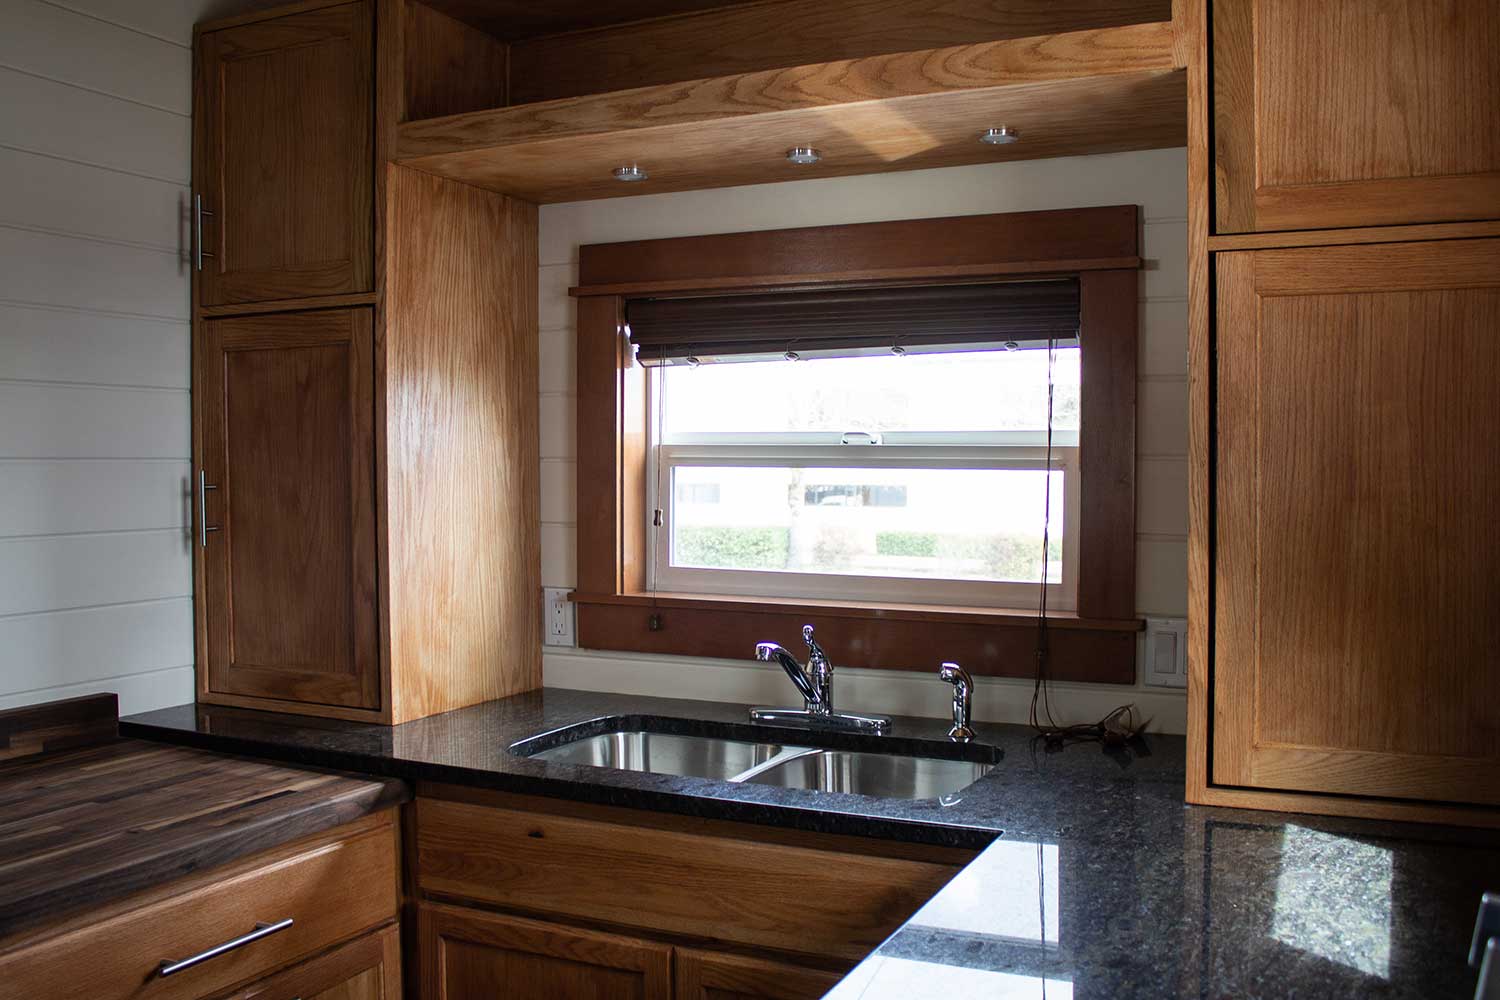 The Pioneer custom tiny home's kitchen